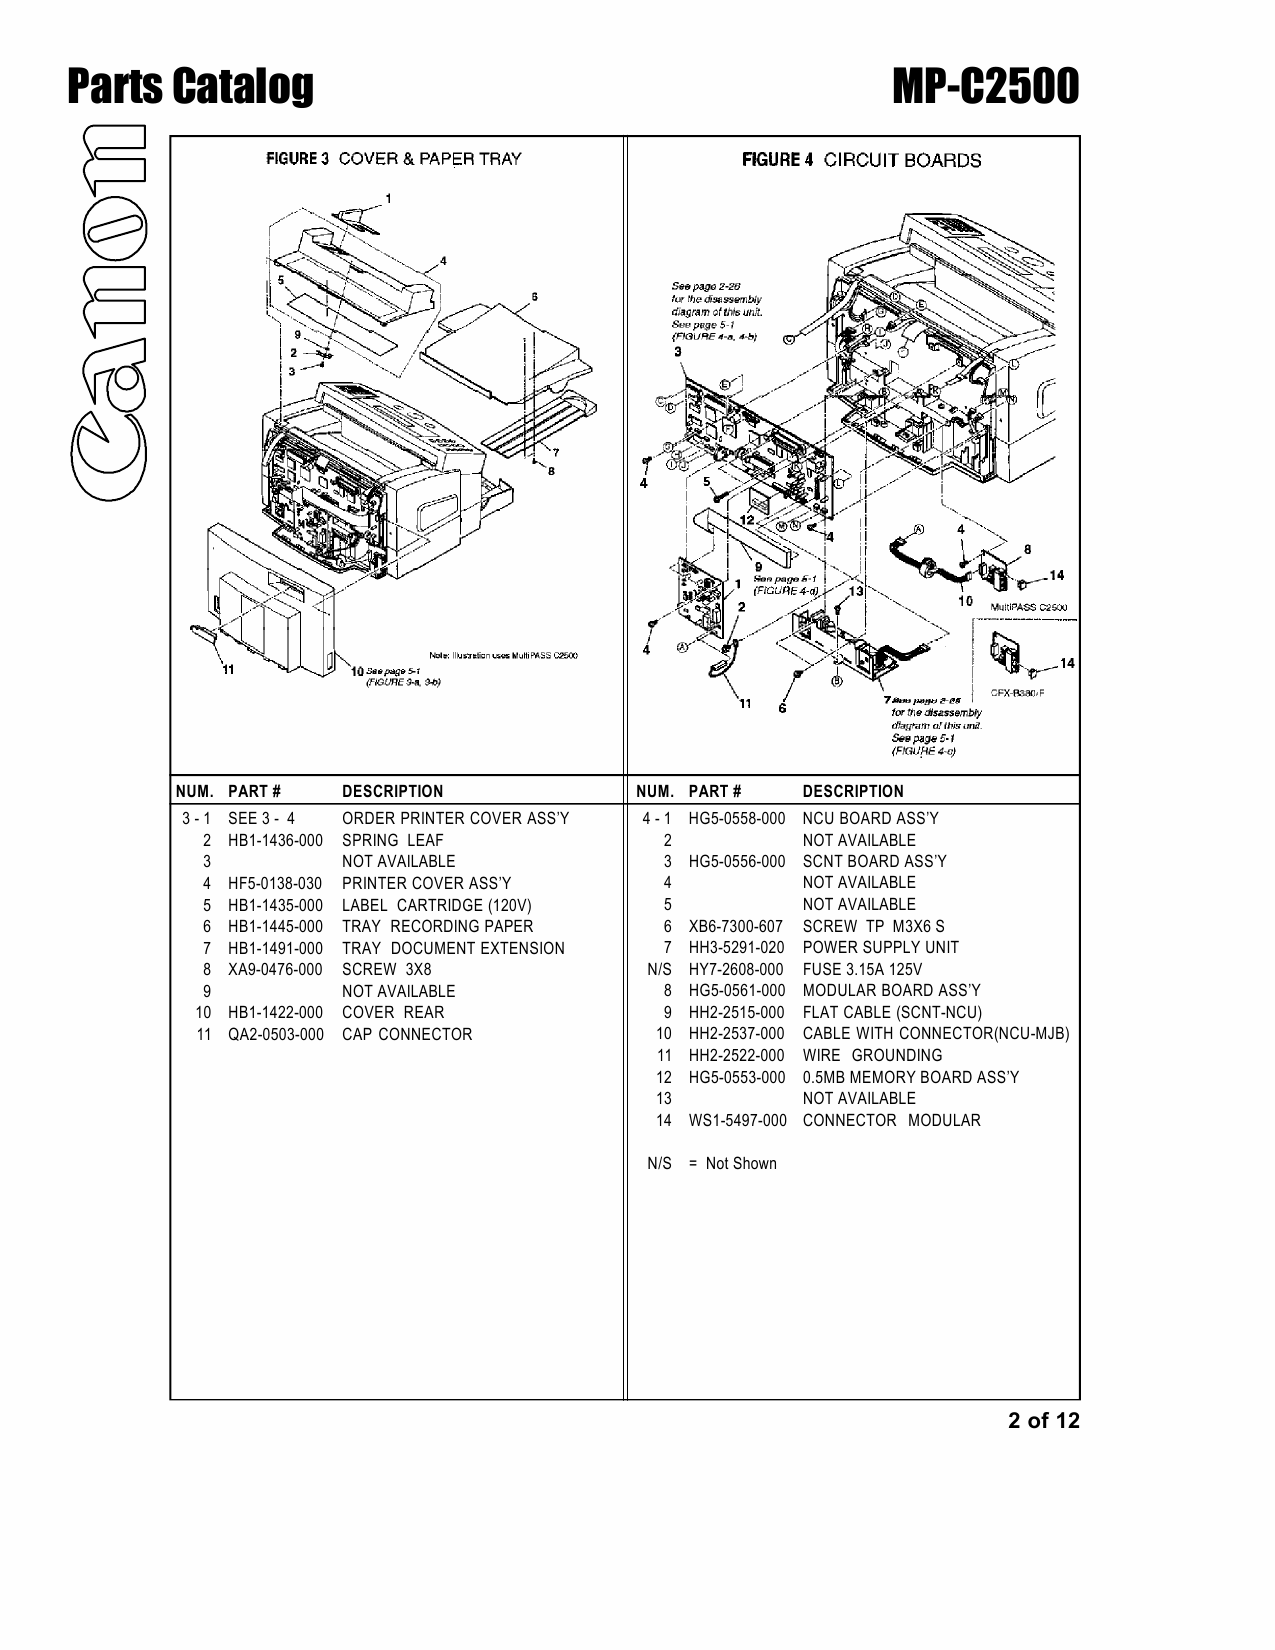 Canon MultiPASS MP-C2500 Parts Catalog Manual-2